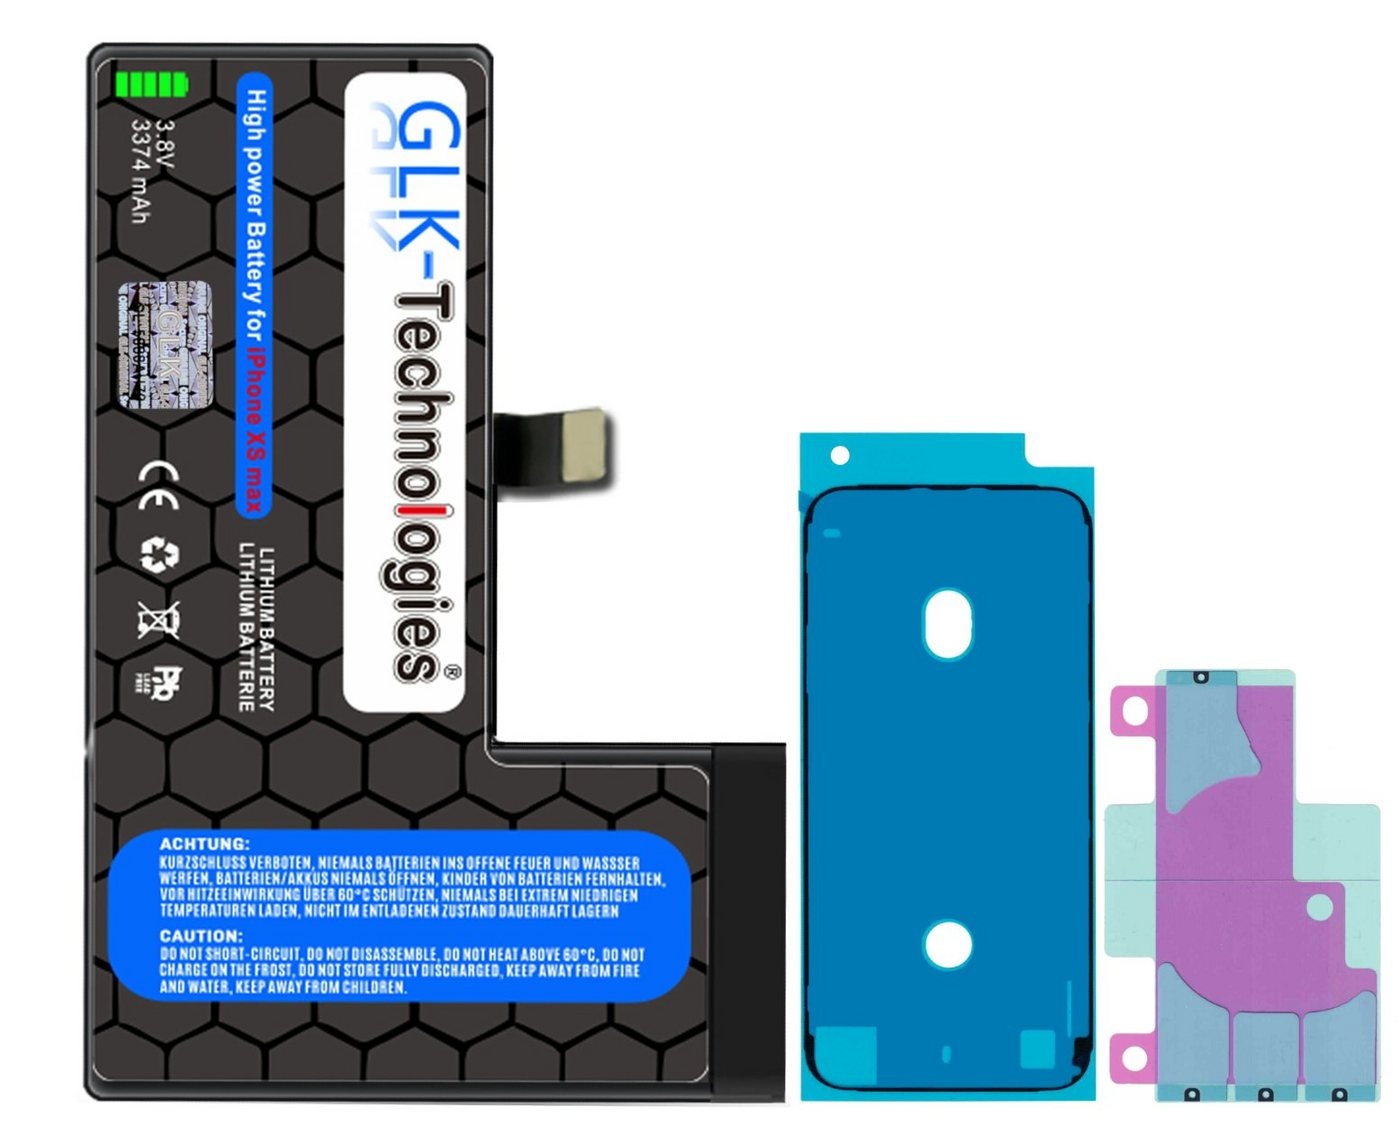 GLK-Technologies Ersatz Akku für iPhone XS MAX inkl. 2X Klebebandsätze Smartphone-Akku 2930 mAh (3,8 V)